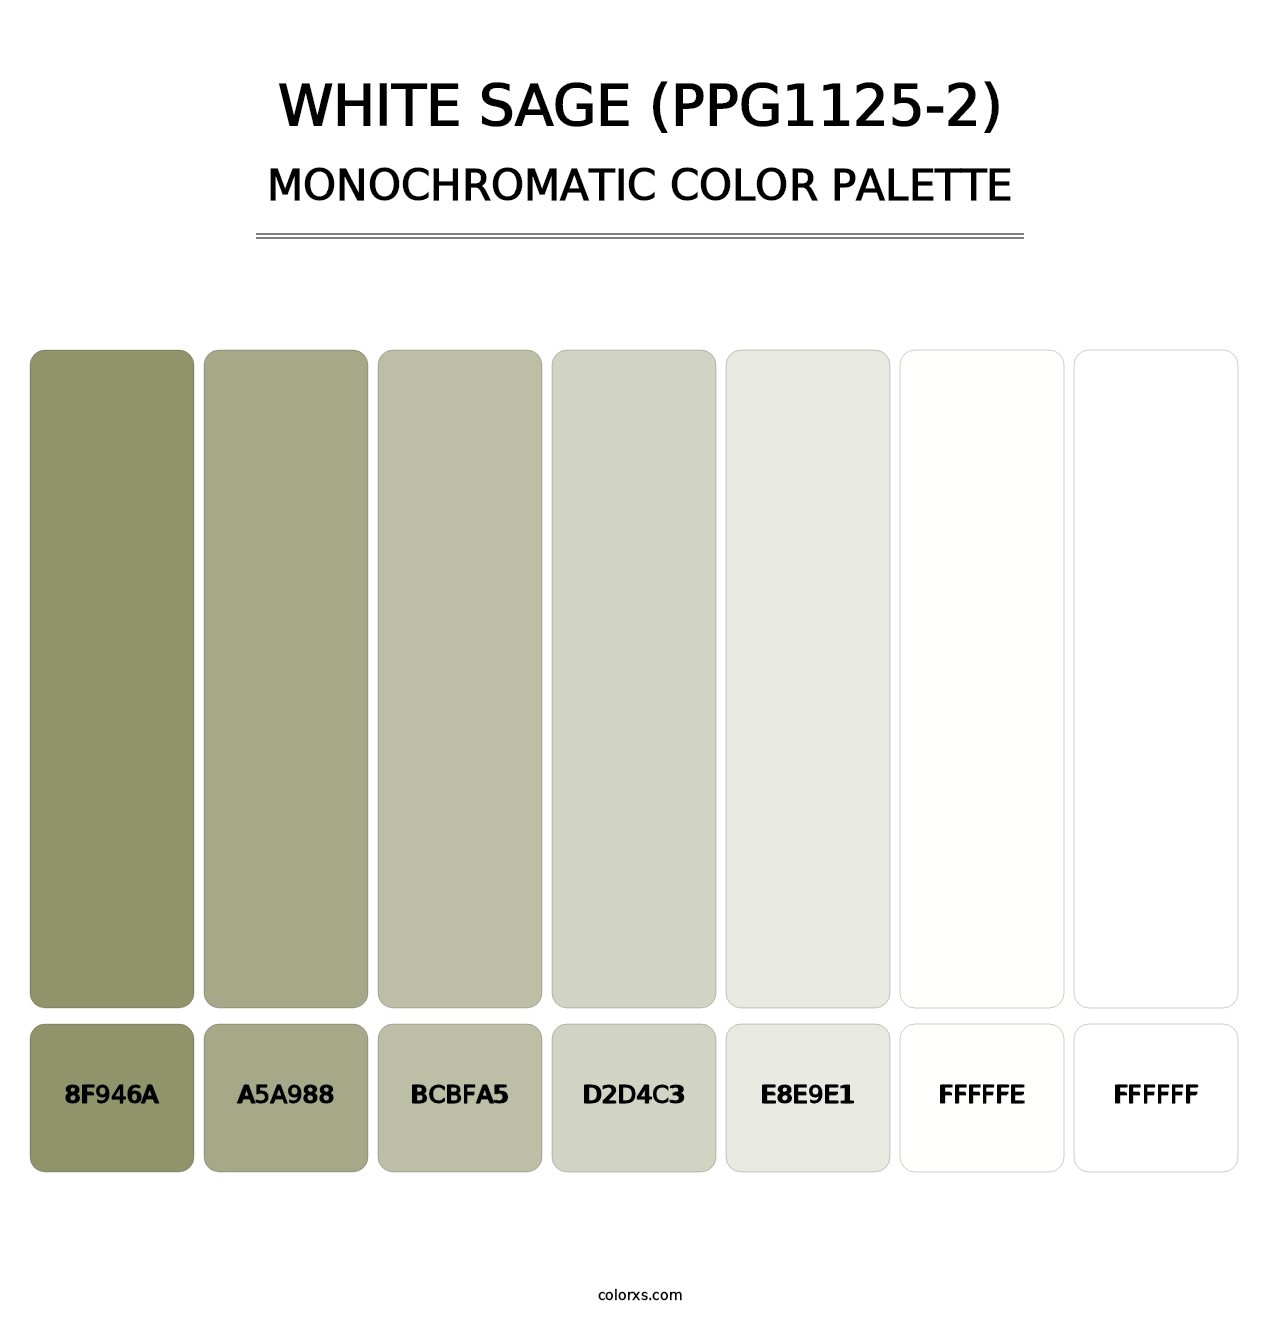 White Sage (PPG1125-2) - Monochromatic Color Palette